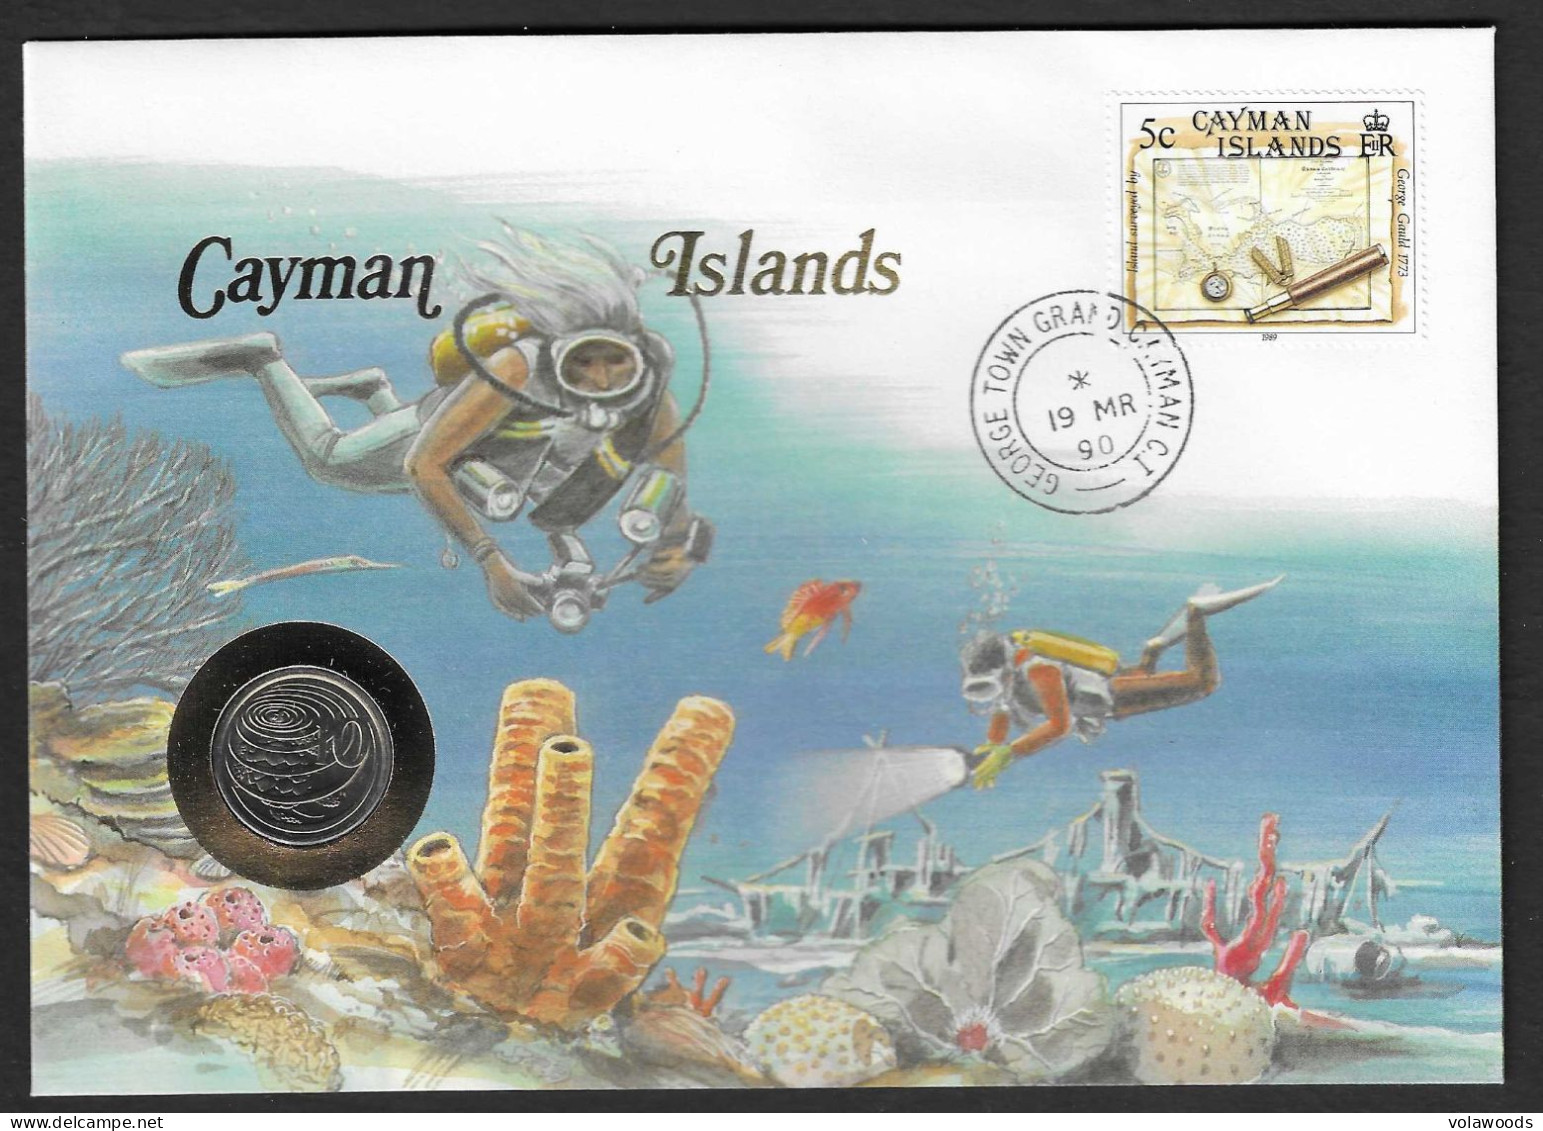 Cayman - Busta Commemorativa Con Moneta FdC Da 10 Pence Km89 - 1987 - Caimán (Islas)